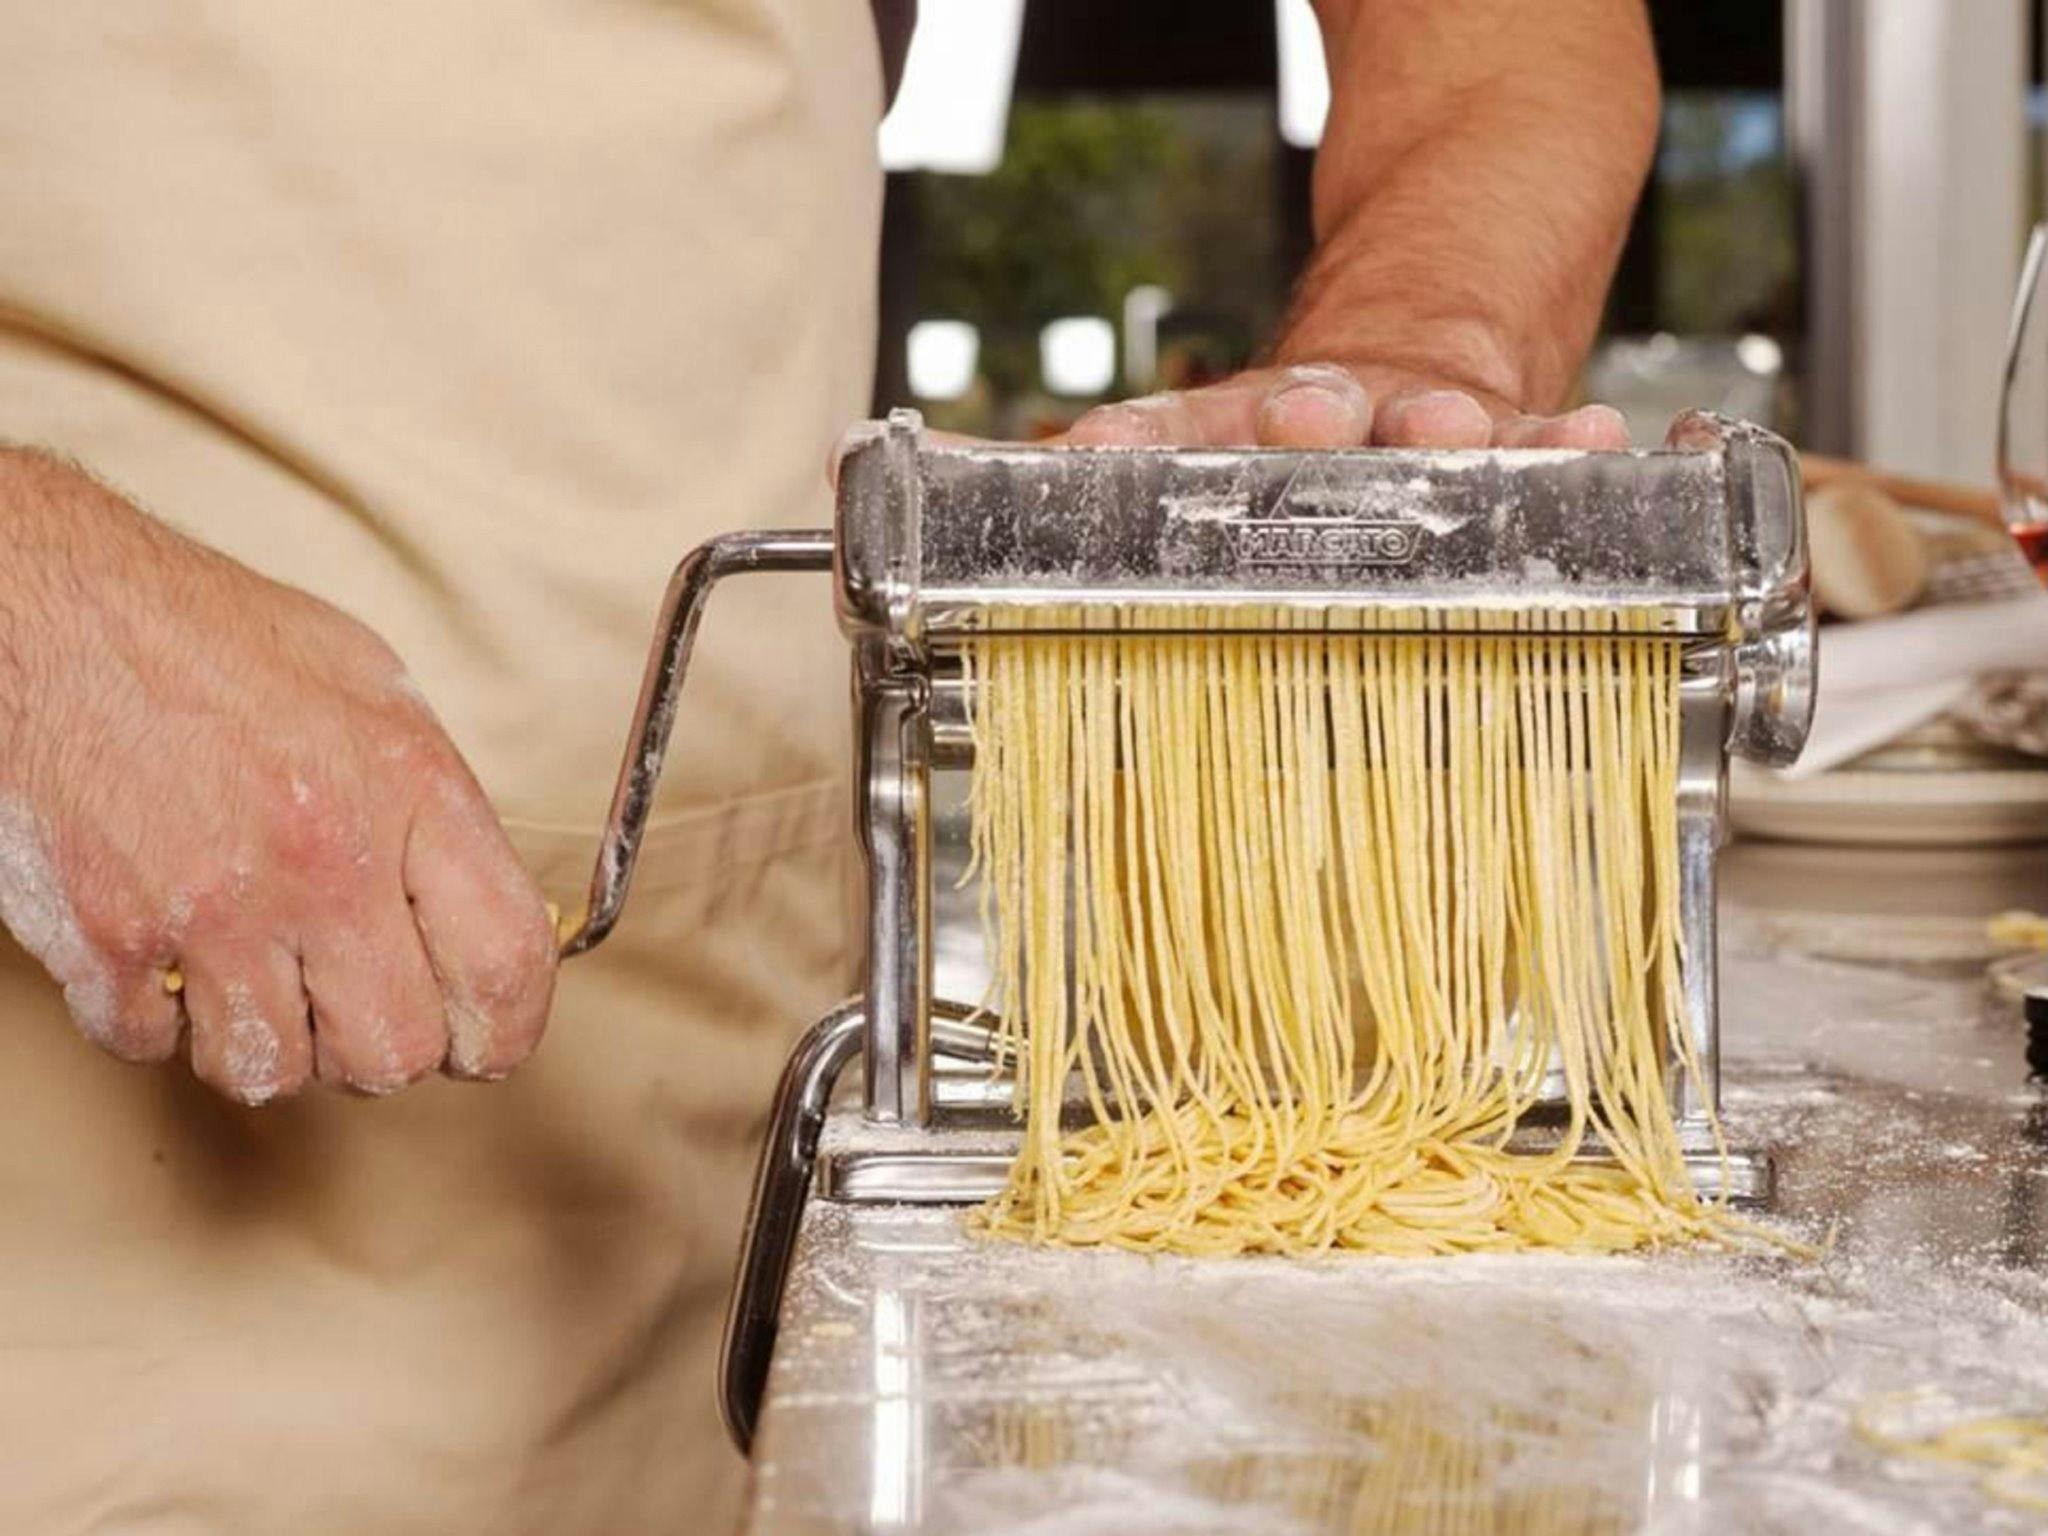 Making pasta in the A tavola! kitchen